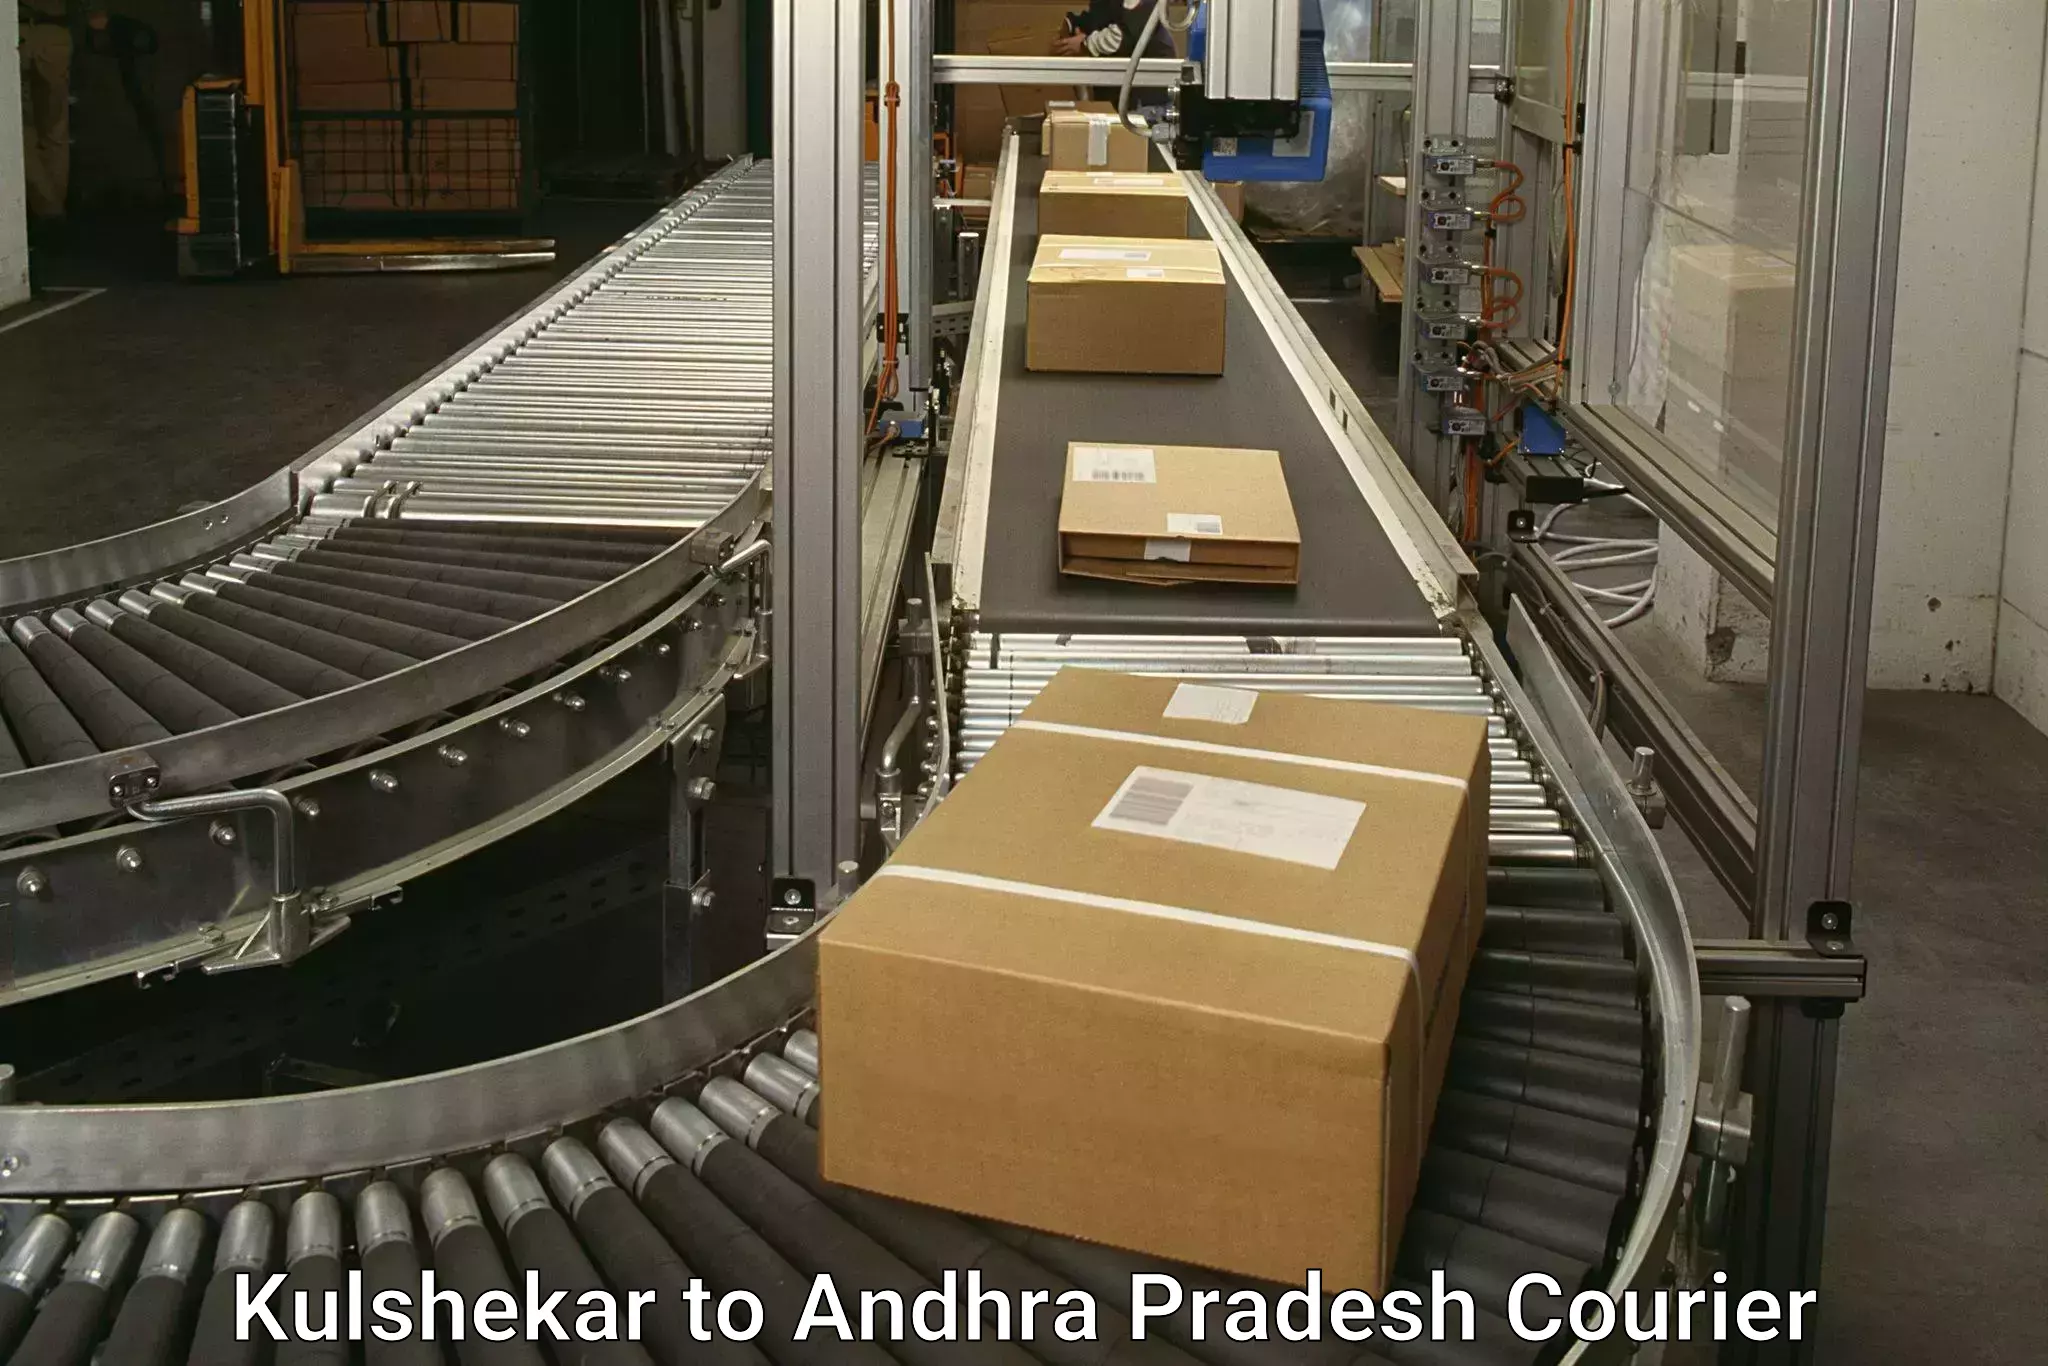 Cost-effective courier options Kulshekar to Visakhapatnam Port